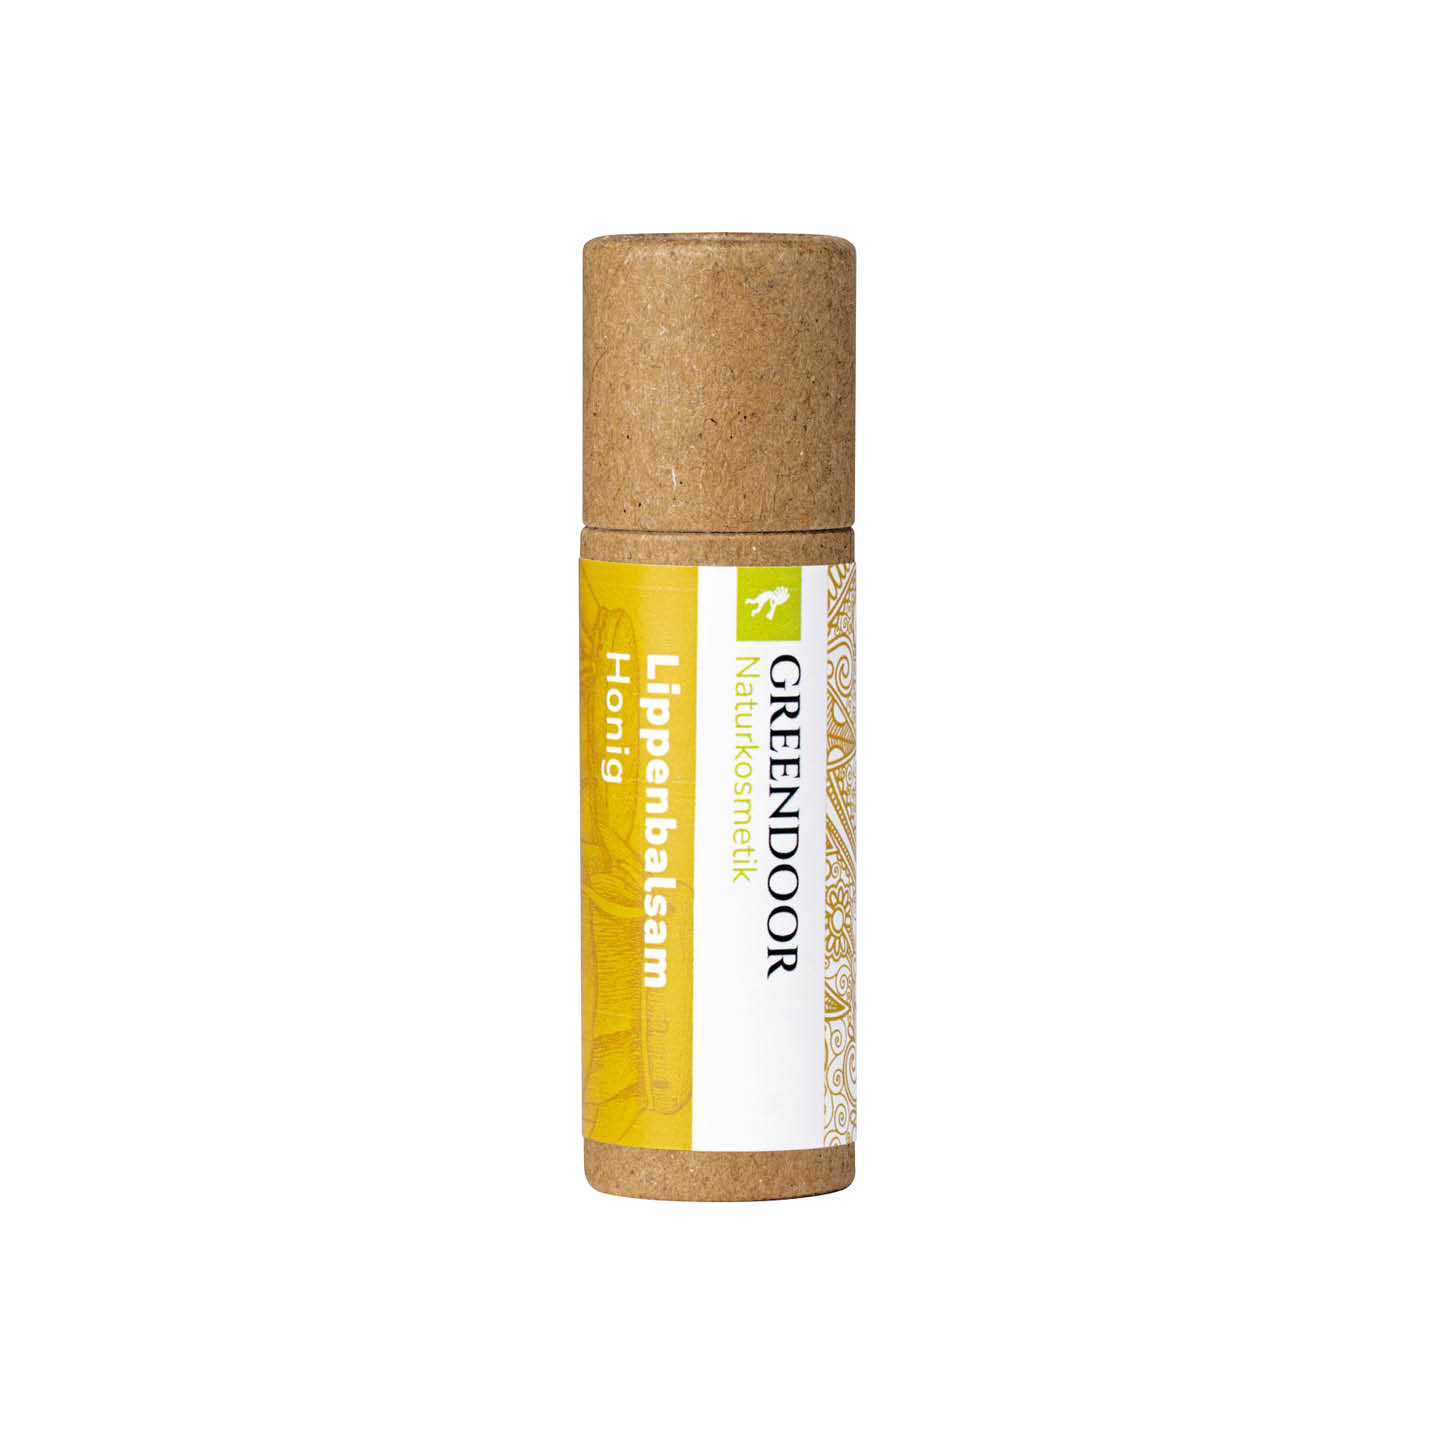 Lippenbalm Honig, Lippenpflege Stift Hülse aus 100% Pappe, Lippenbalsam für zarte Lippen